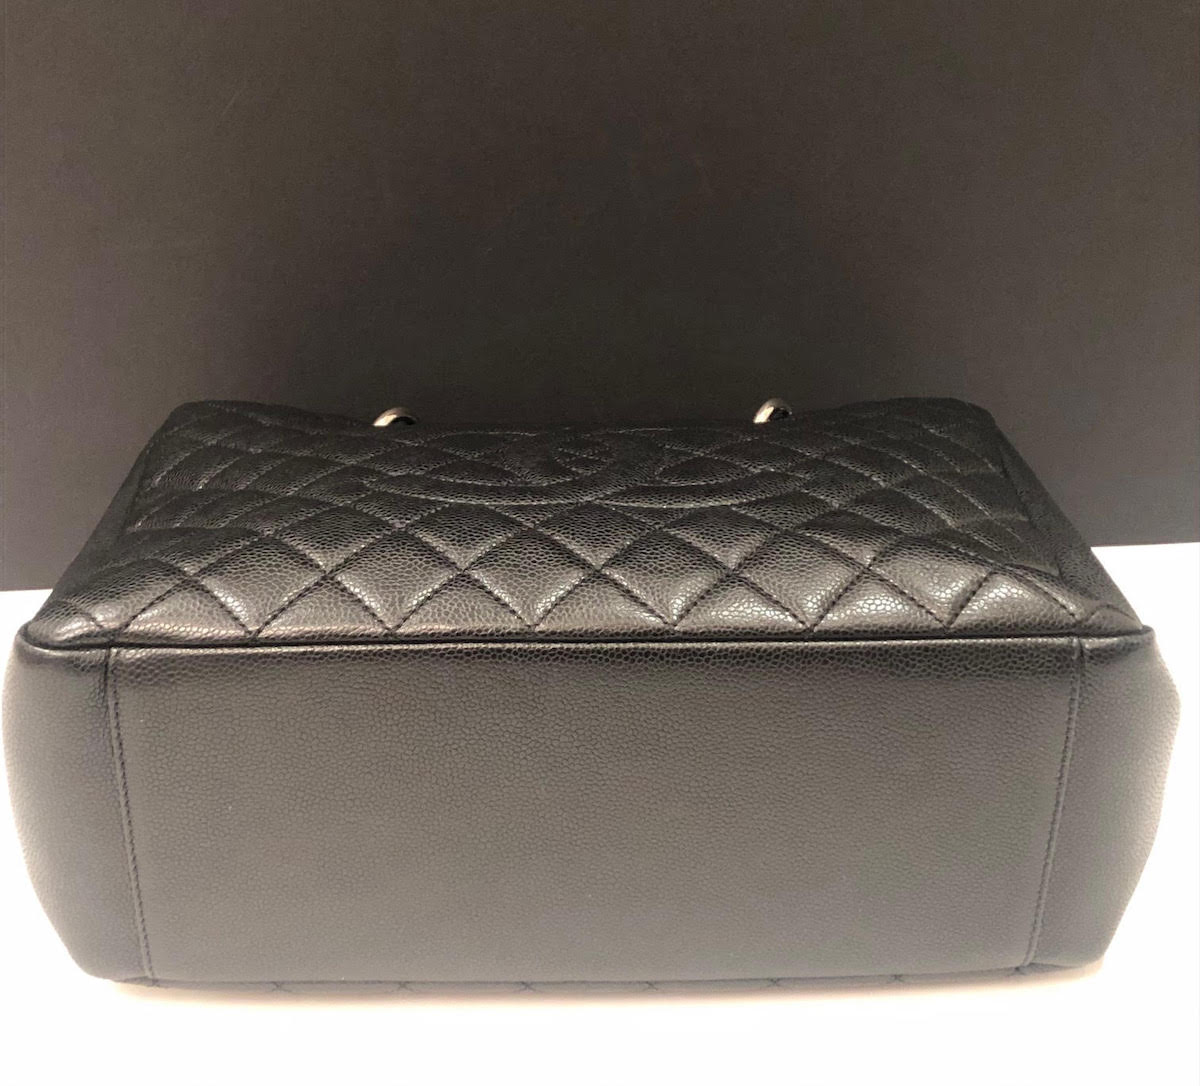 Chanel Grand Shopping Tote - Black Totes, Handbags - CHA955578